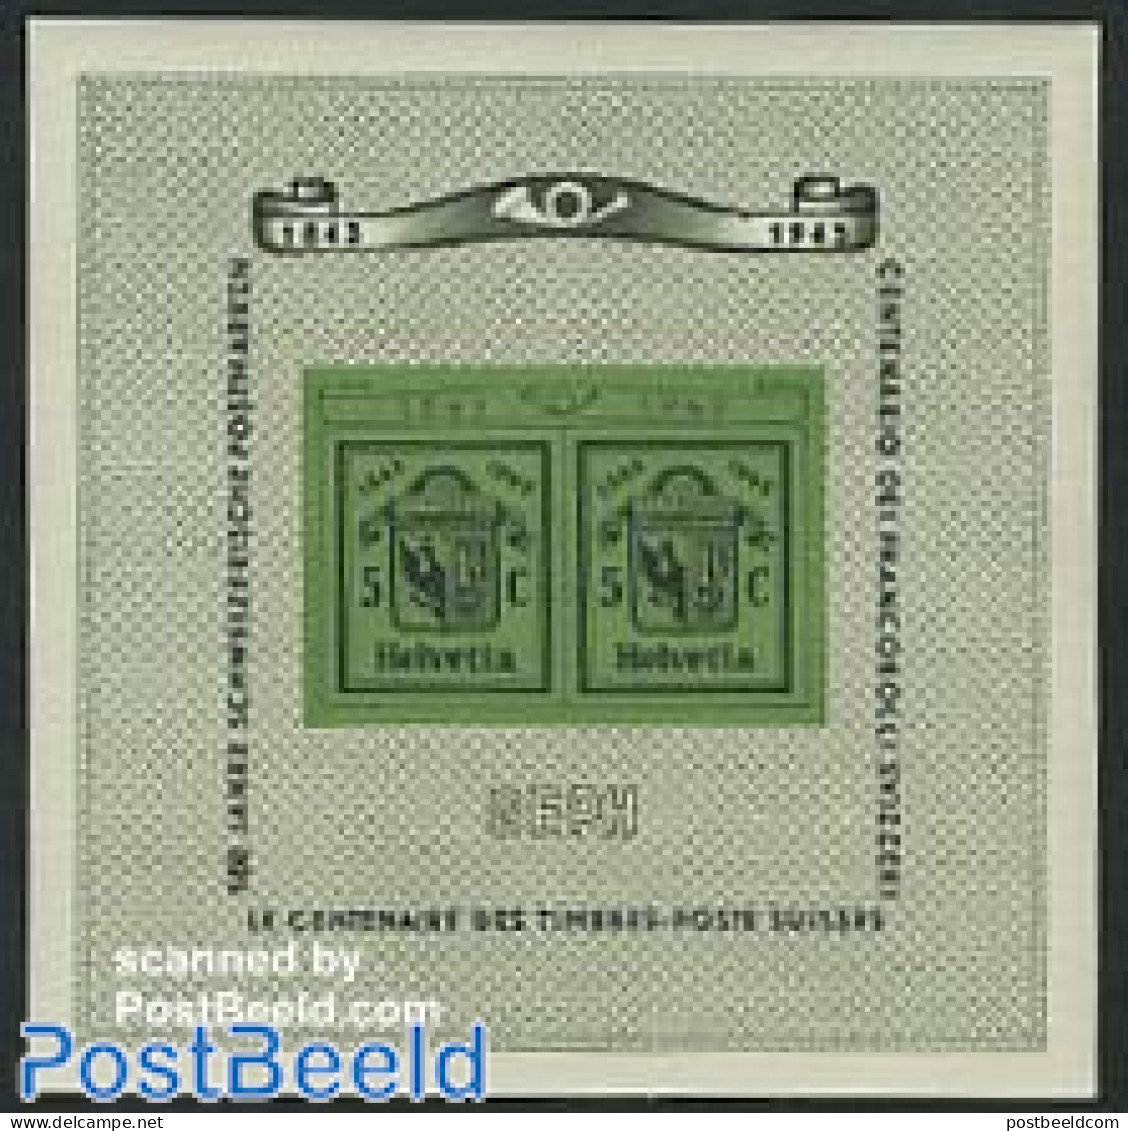 Switzerland 1943 GEPH Stamp Exposition S/s, Mint NH, Stamps On Stamps - Ongebruikt